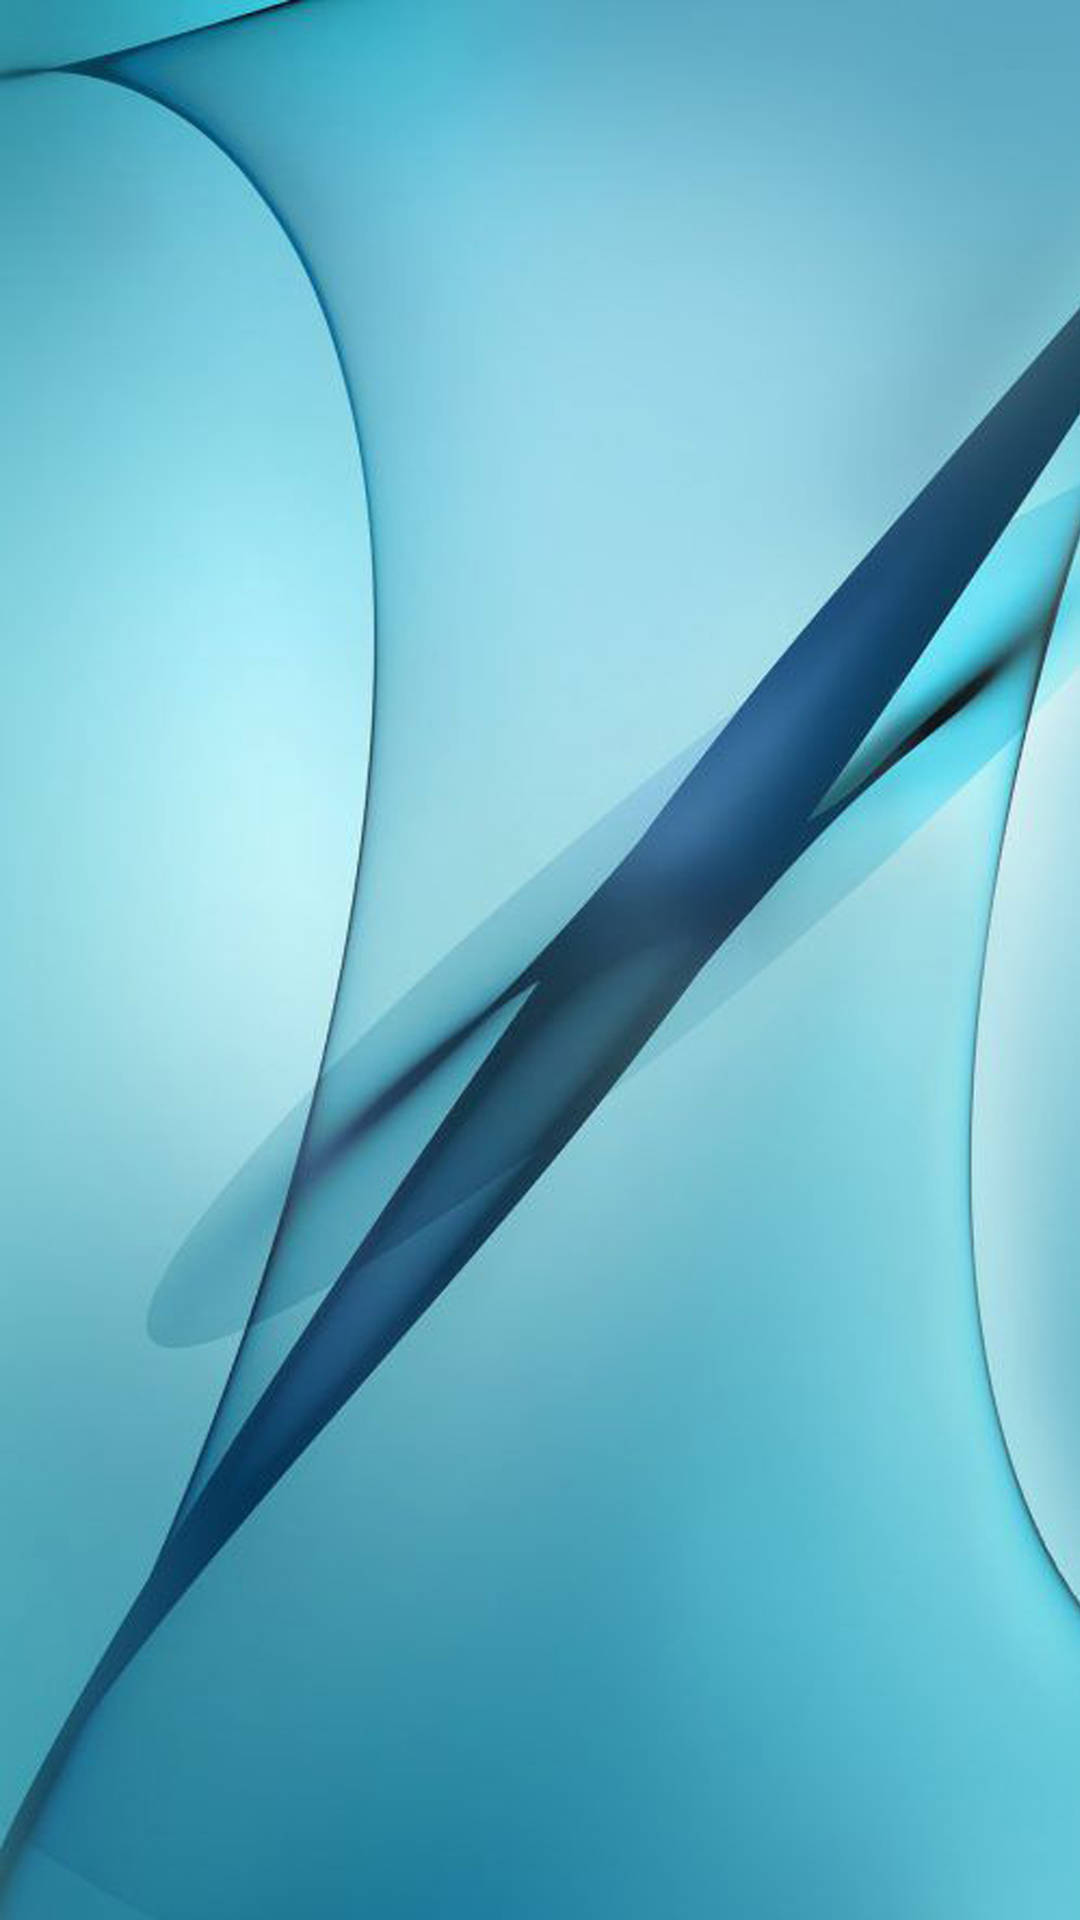 Samsung Galaxy J7 Cerulean Blue Abstract Wallpaper